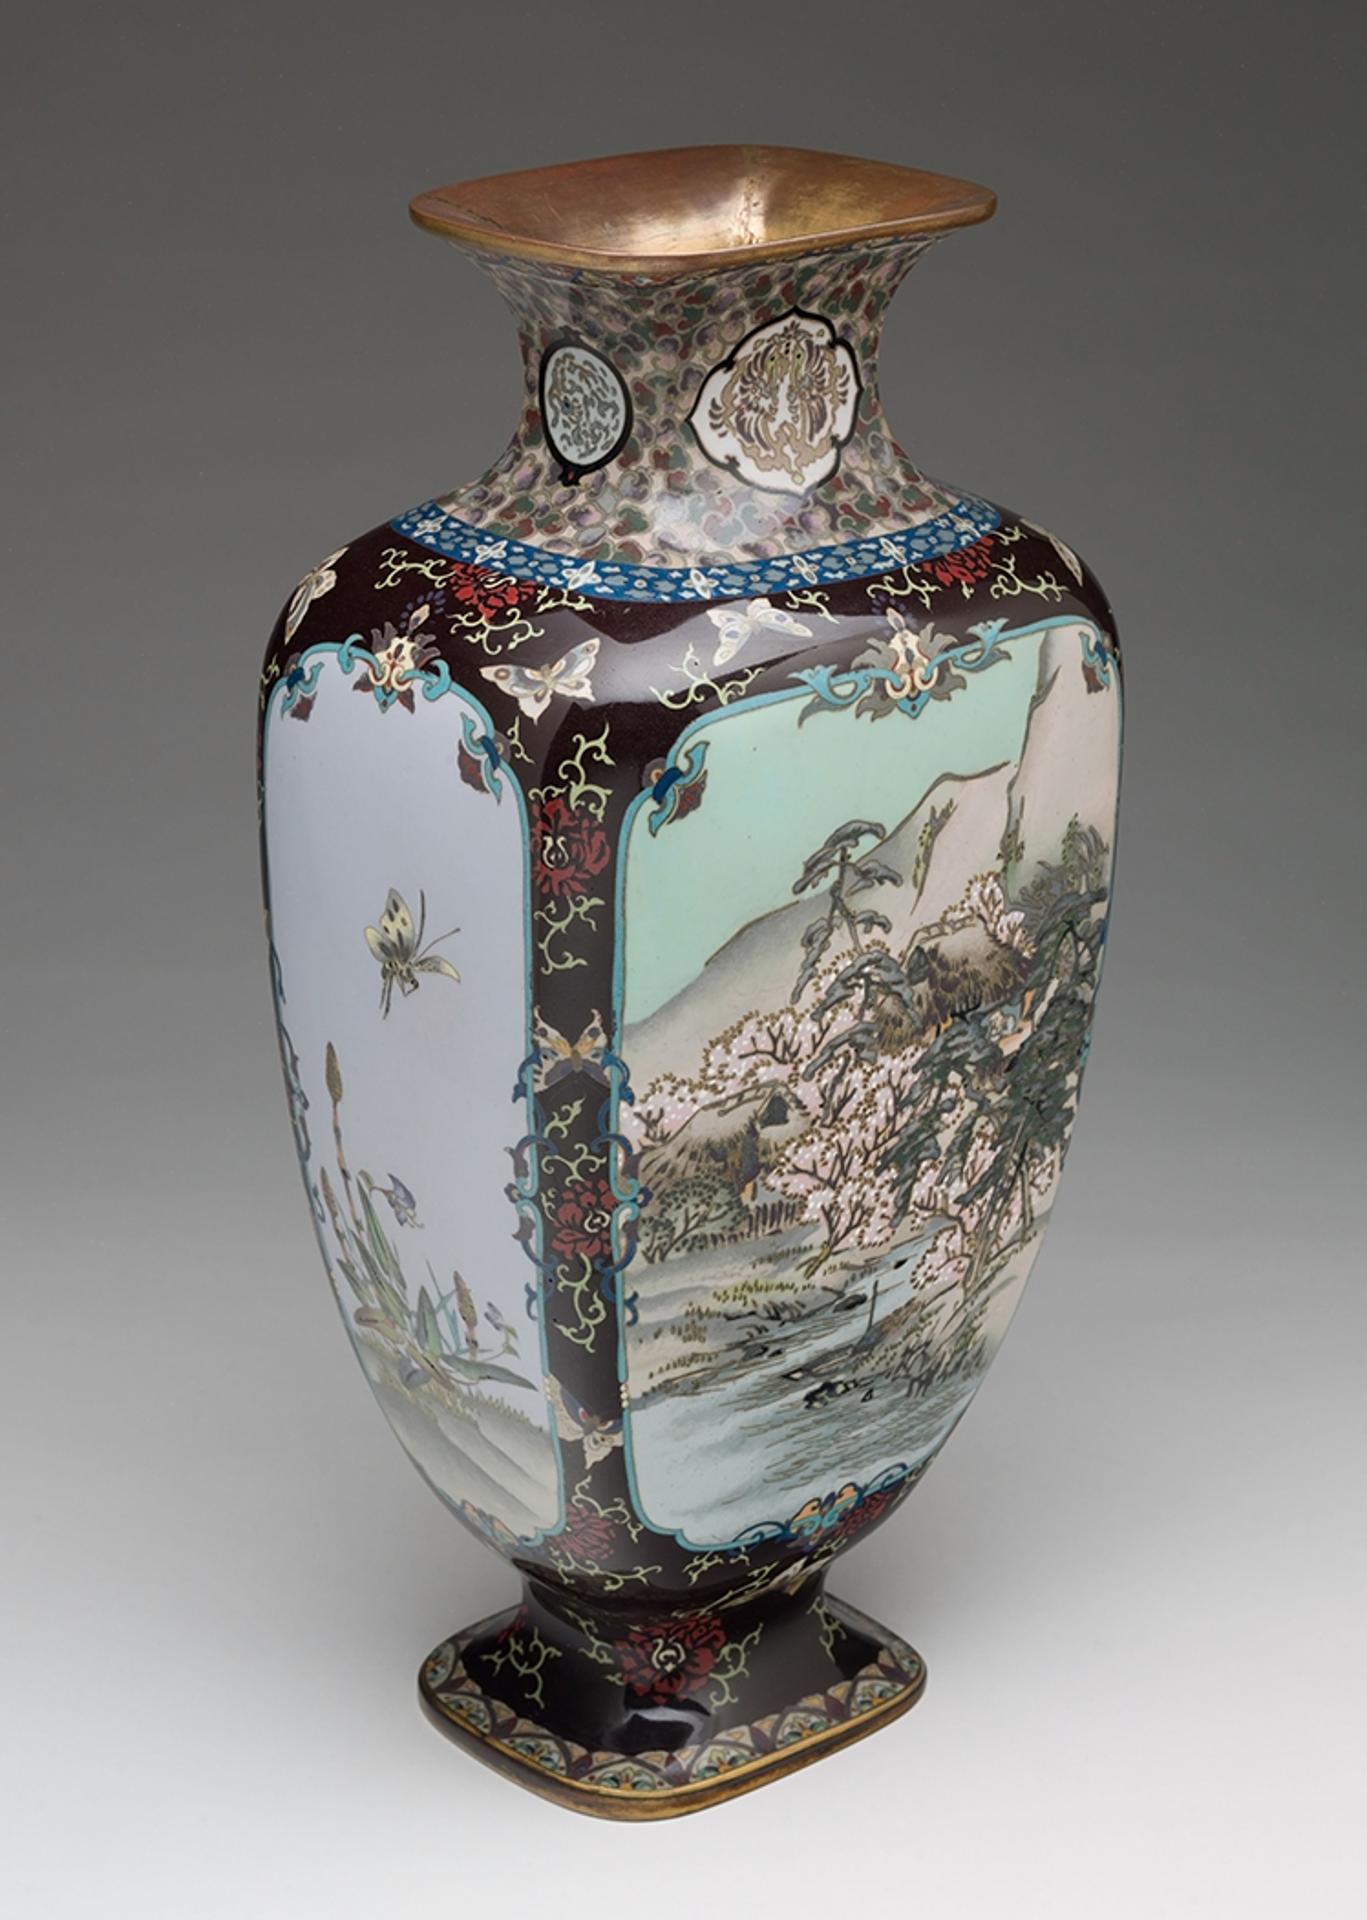 Japanese Art - A Large Japanese Cloisonné Enamel 'Landscape' Vase, Early 20th Century